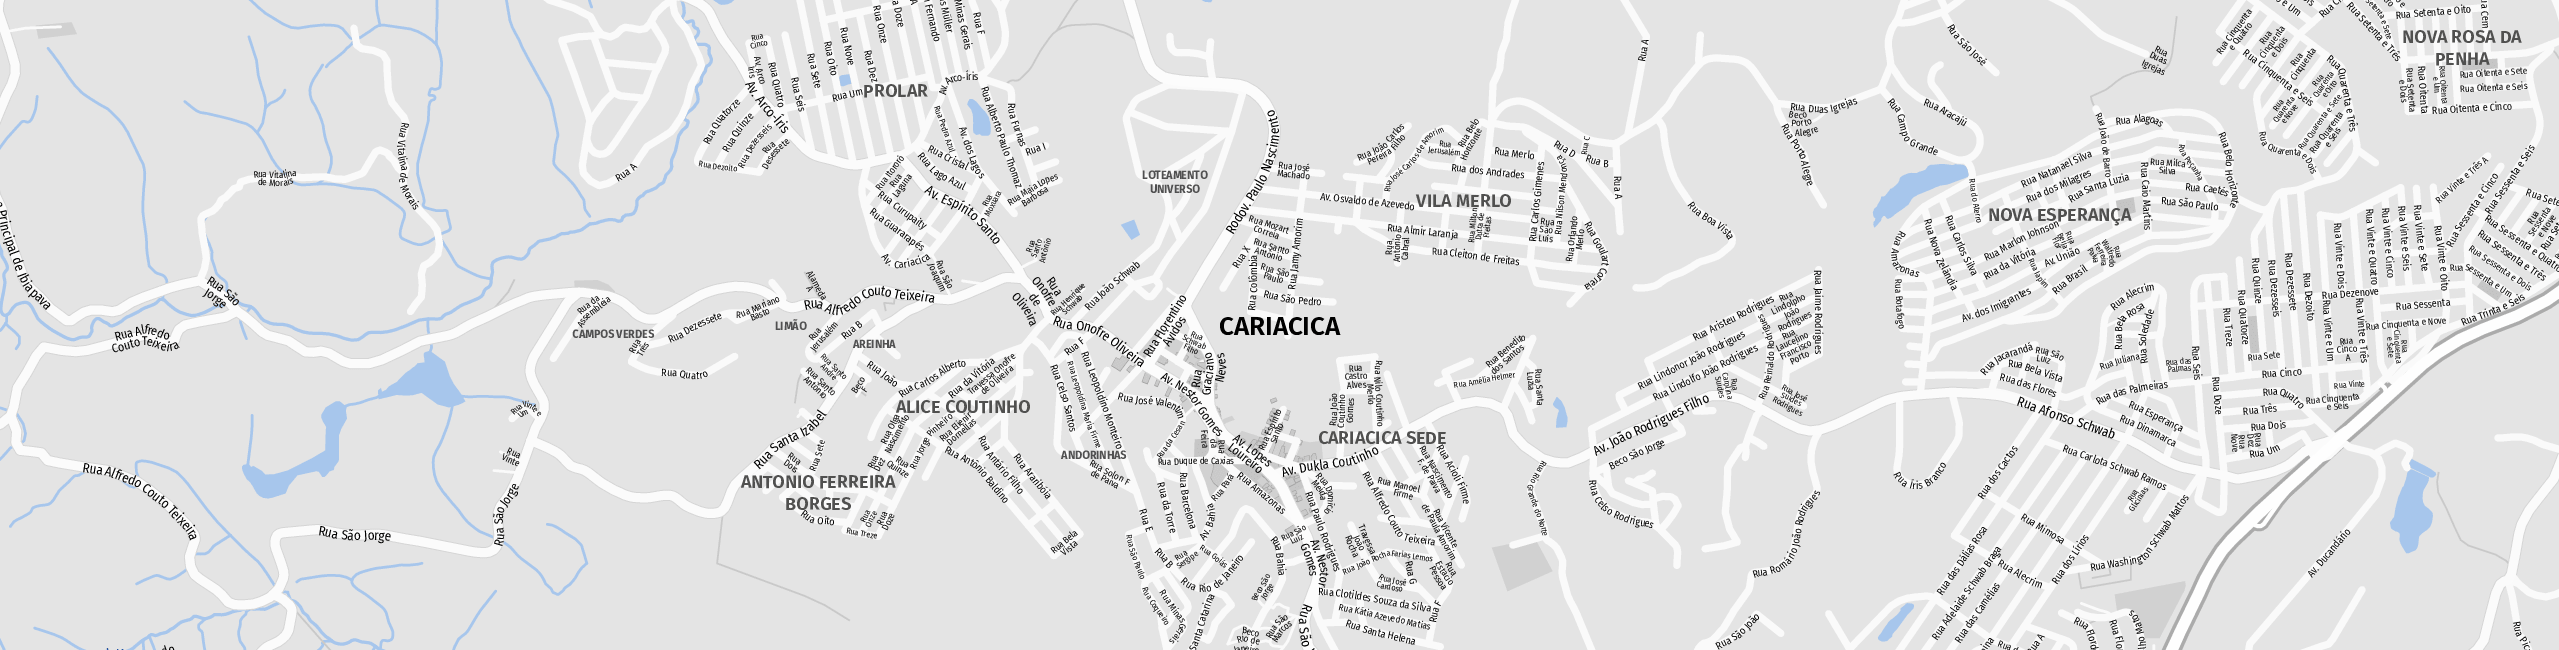 Stadtplan Cariacica zum Downloaden.